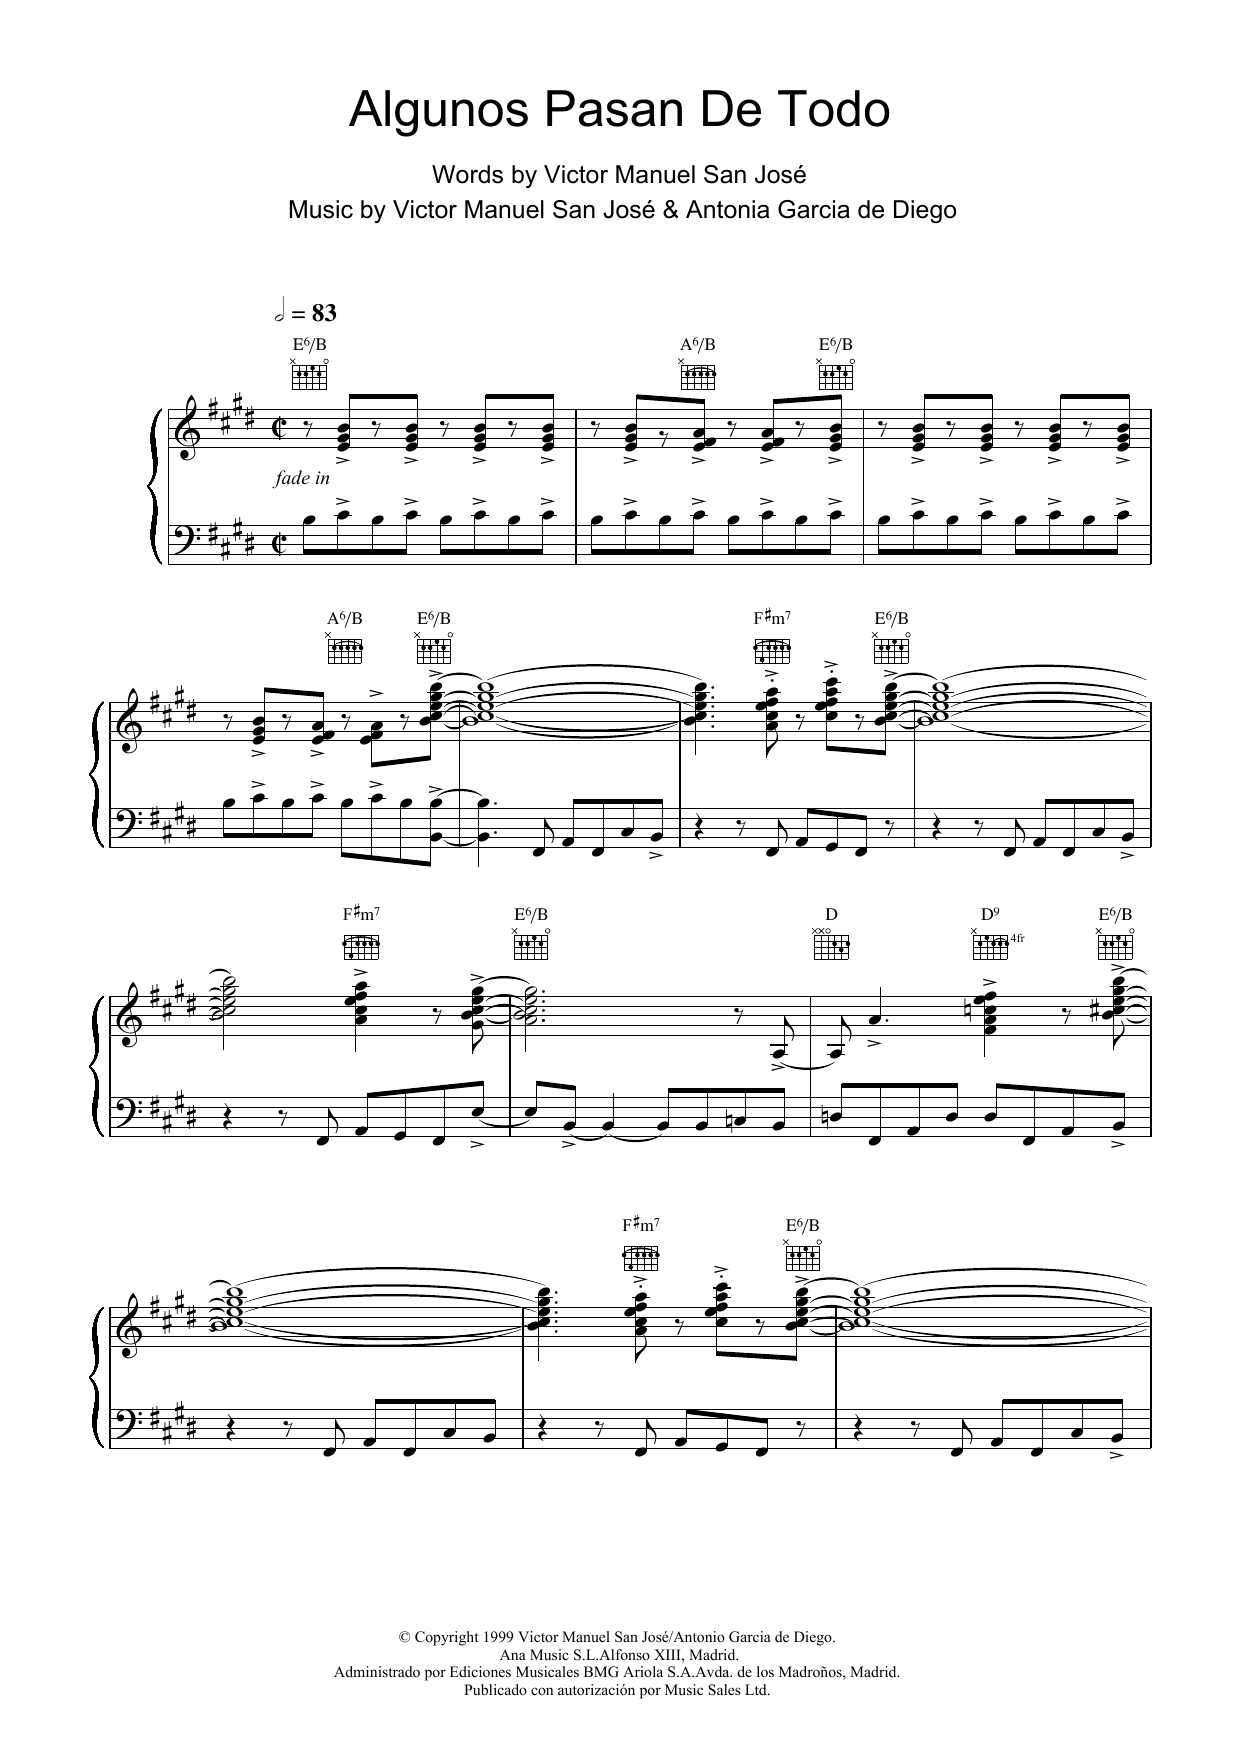 Victor Manuel San Jose Algunos Pasan De Todo Sheet Music Notes & Chords for Piano, Vocal & Guitar - Download or Print PDF